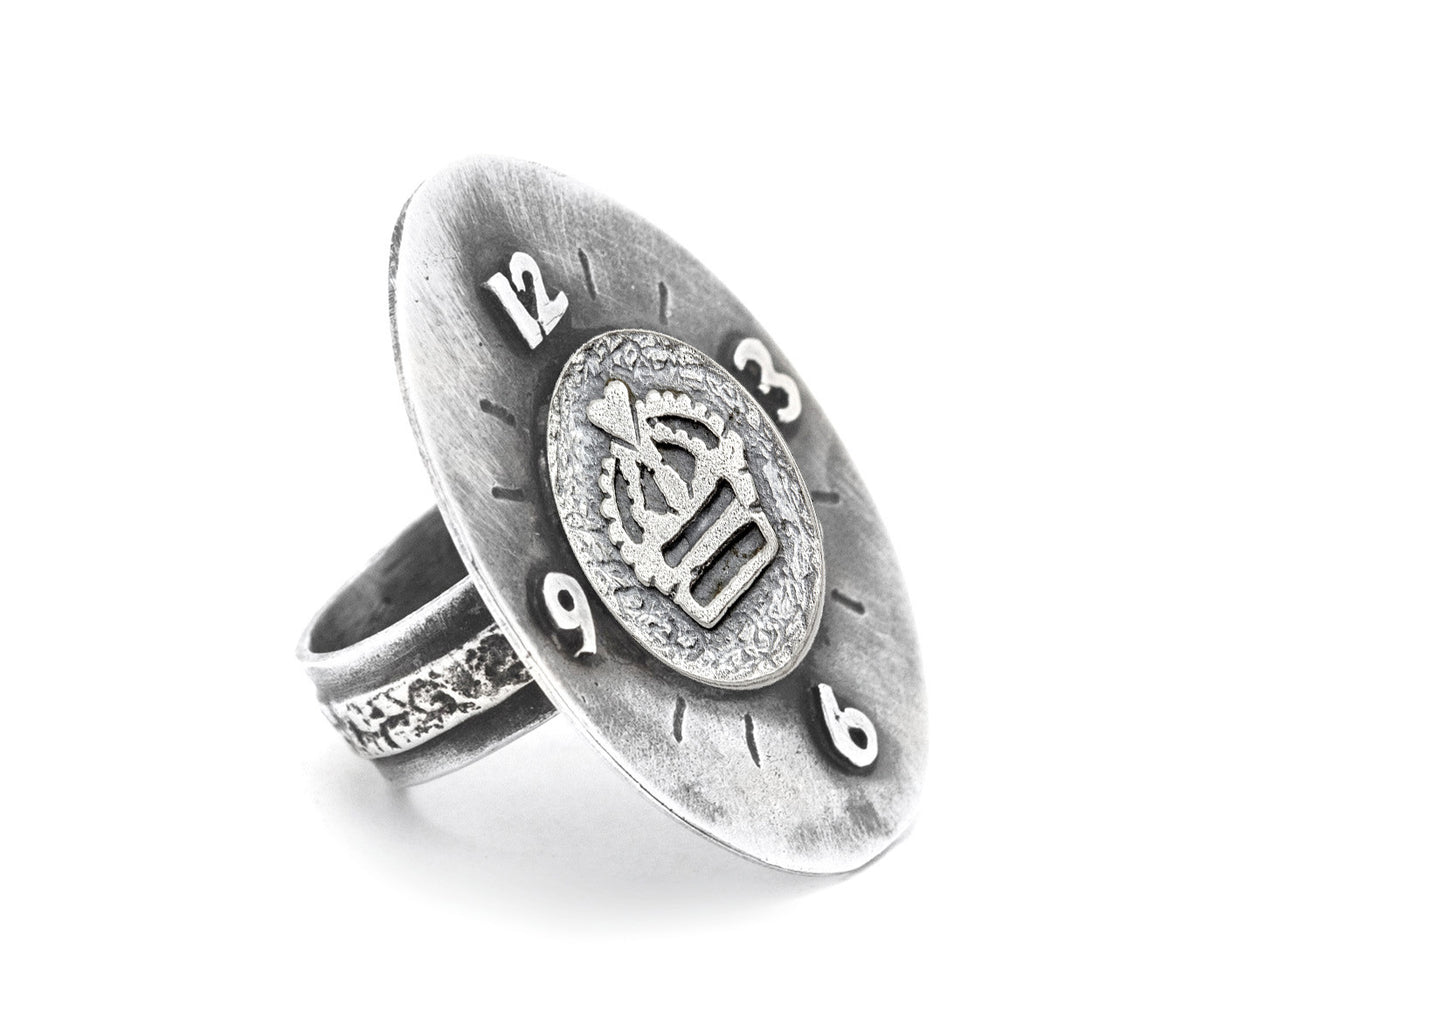 Regal Crown Medallion Clock Ring